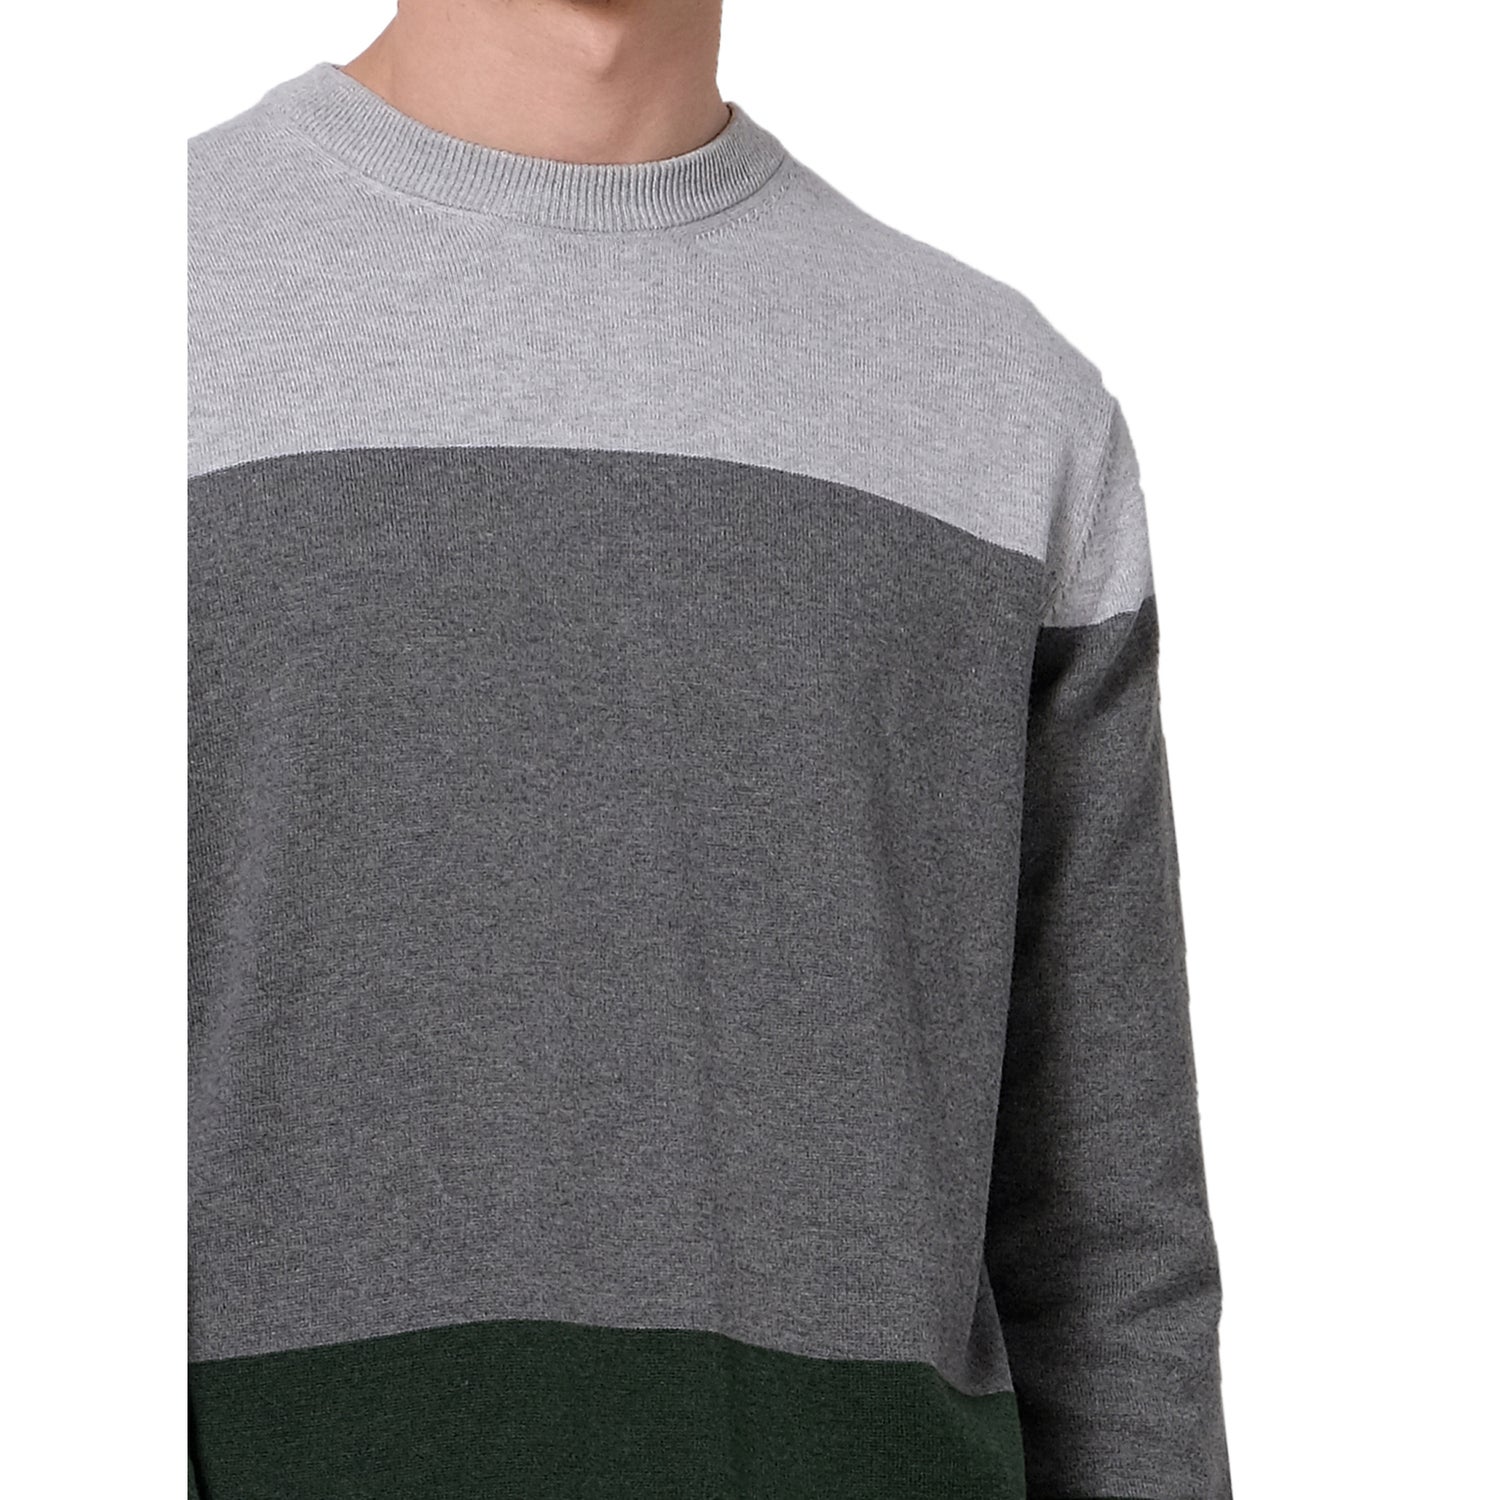 Green Colourblocked Pullover Sweater (SERAIN)